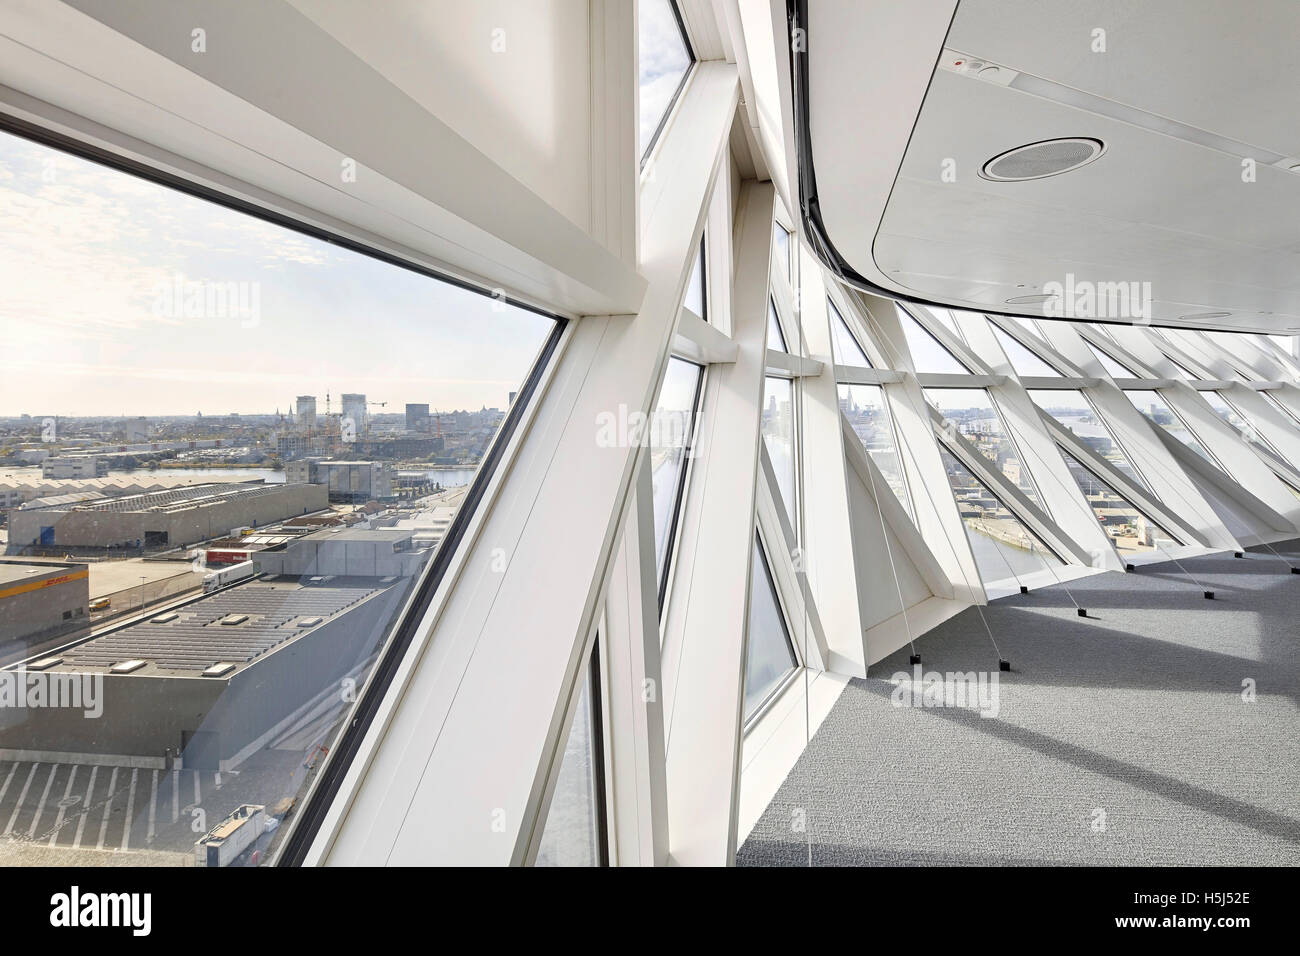 Corridor with triangular window panes. Port House, Antwerp, Belgium. Architect: Zaha Hadid Architects, 2016. Stock Photo